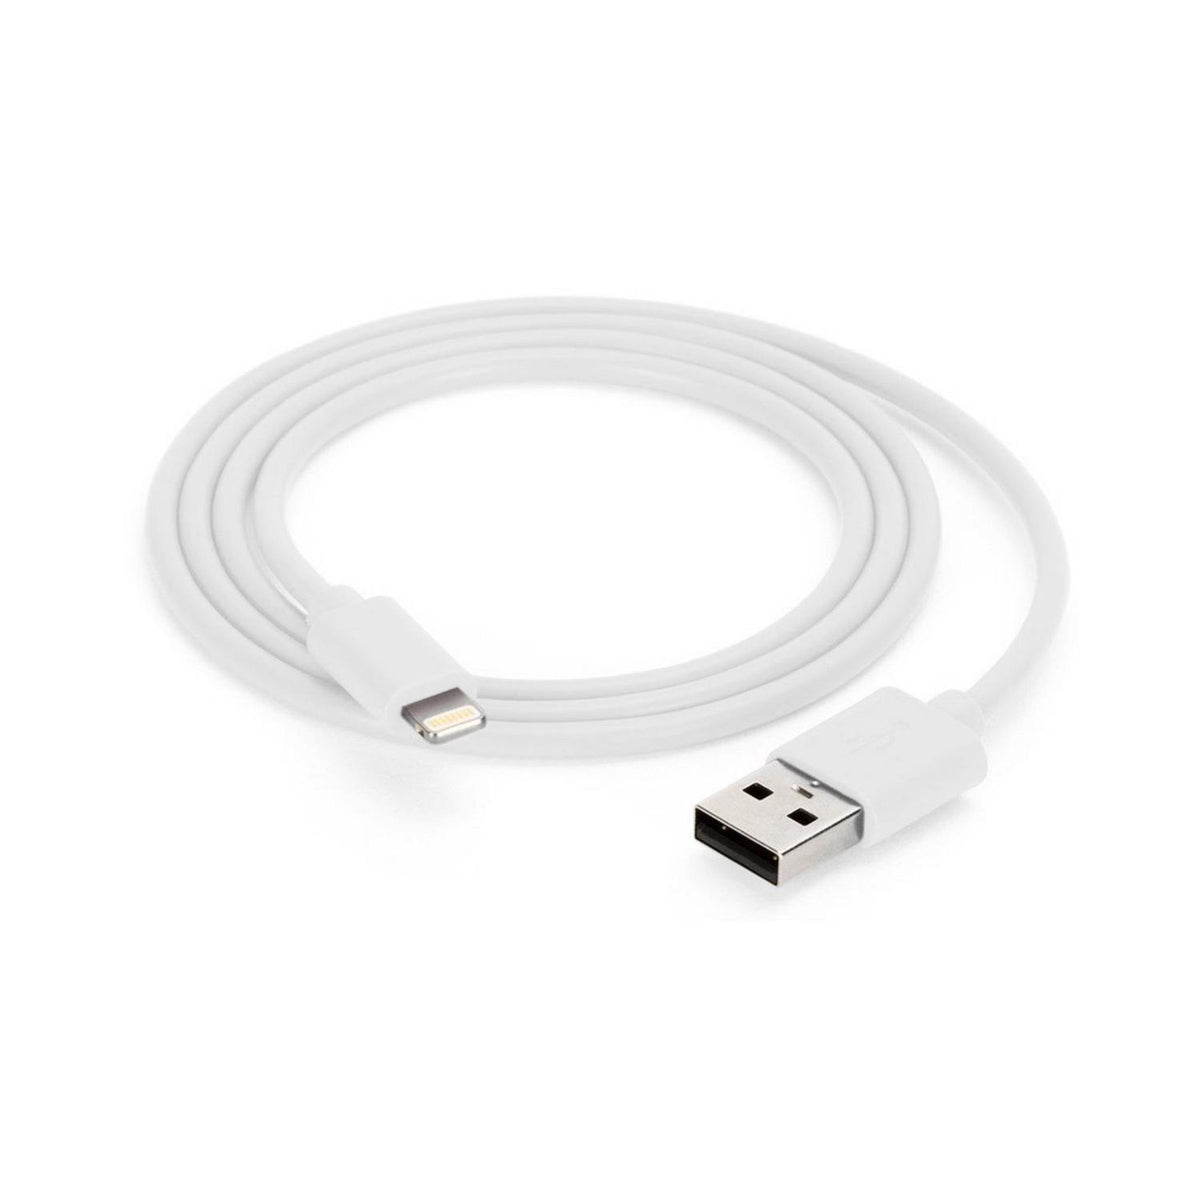 Griffin Cable De Usb-a A Lightning Cable USB-A a Lightning 91cm - vertikal